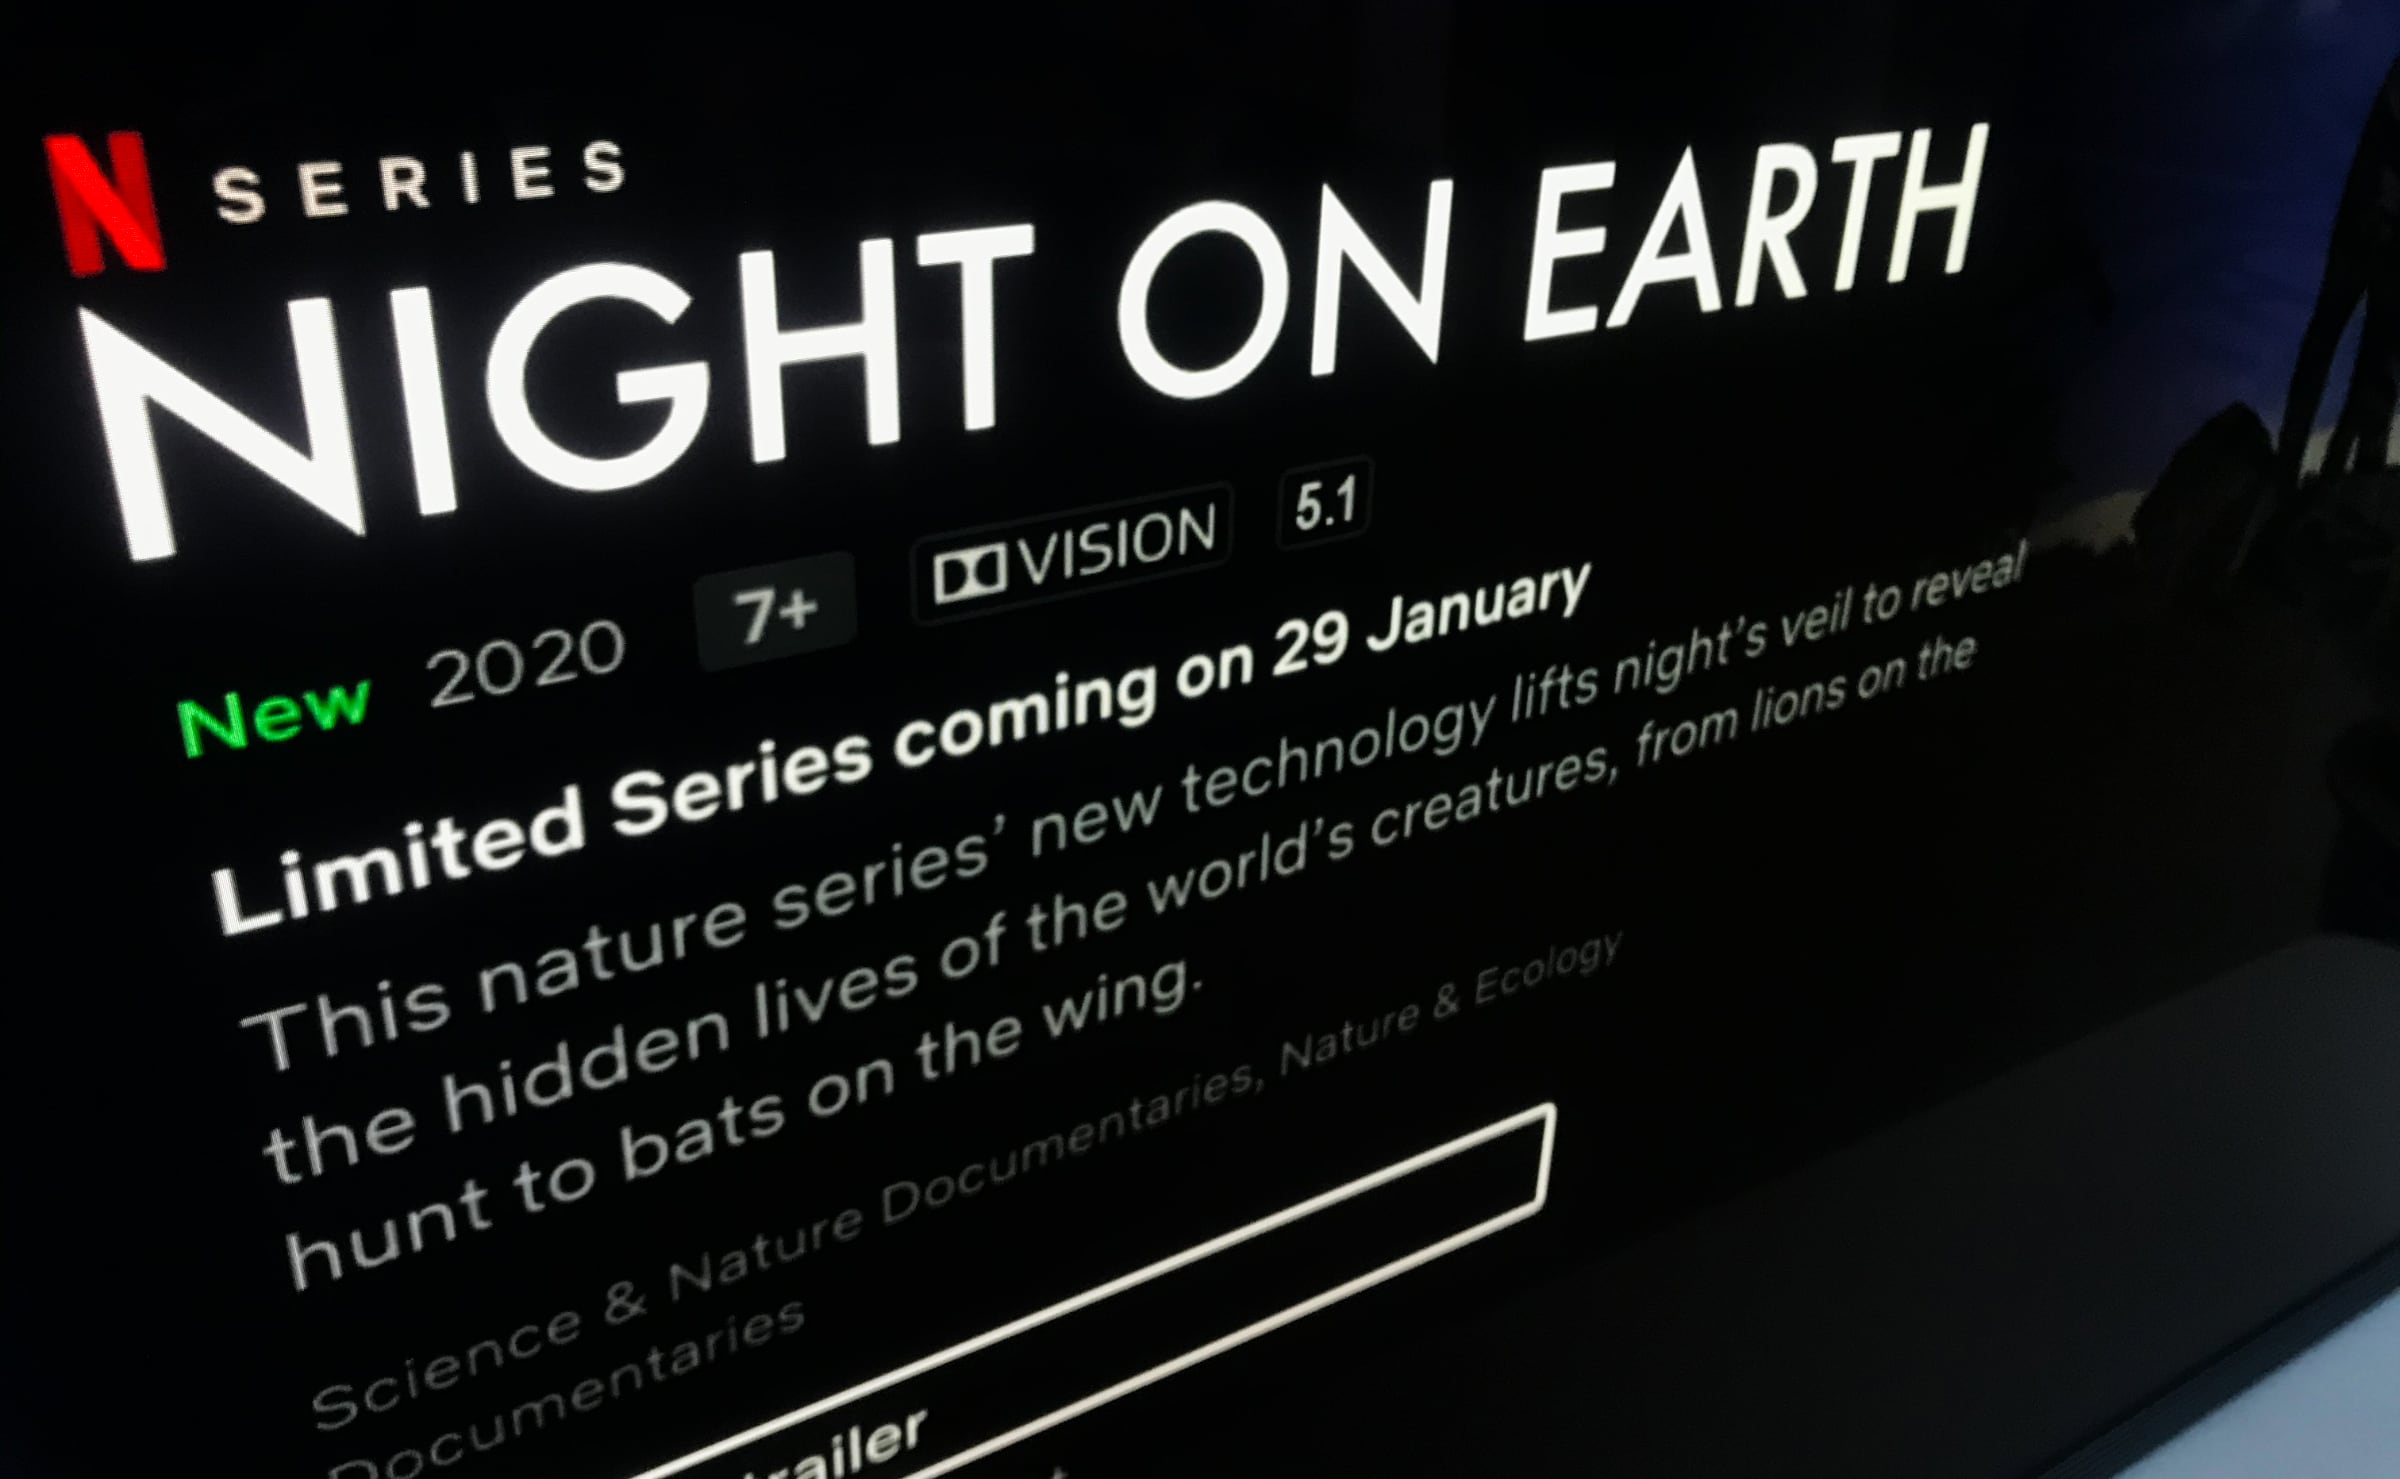 Next epic nature documentary from Netflix 'Night on Earth' - FlatpanelsHD